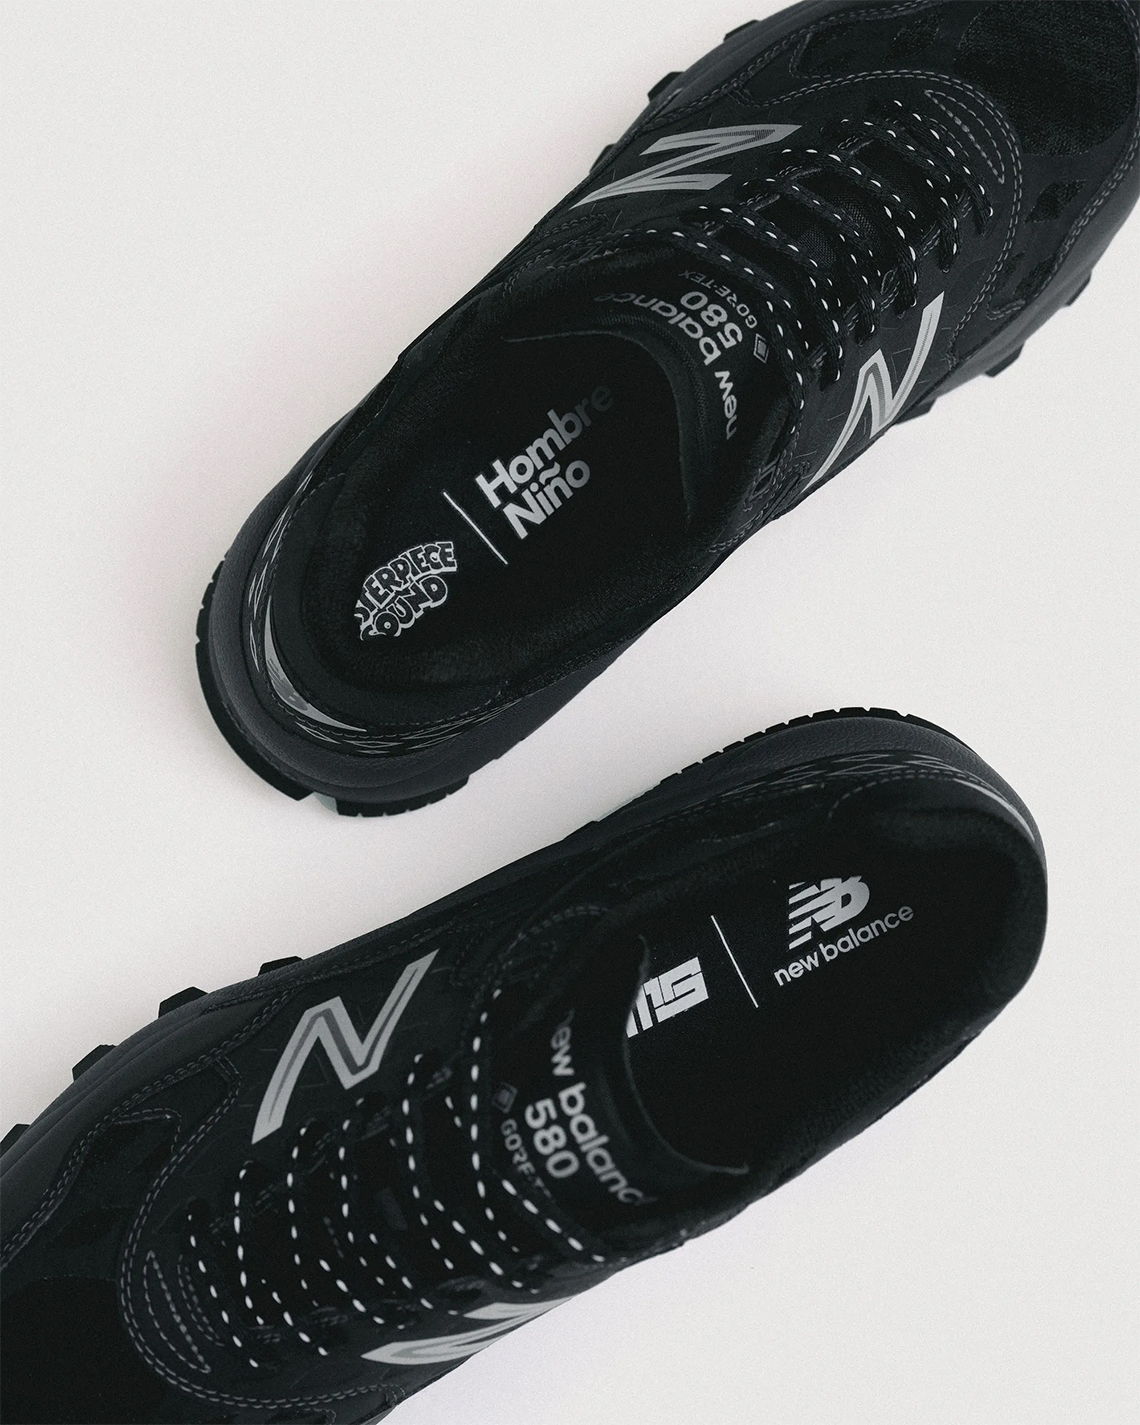 mita sneakers New Balance 580 MT580RMT Release Date | SneakerNews.com